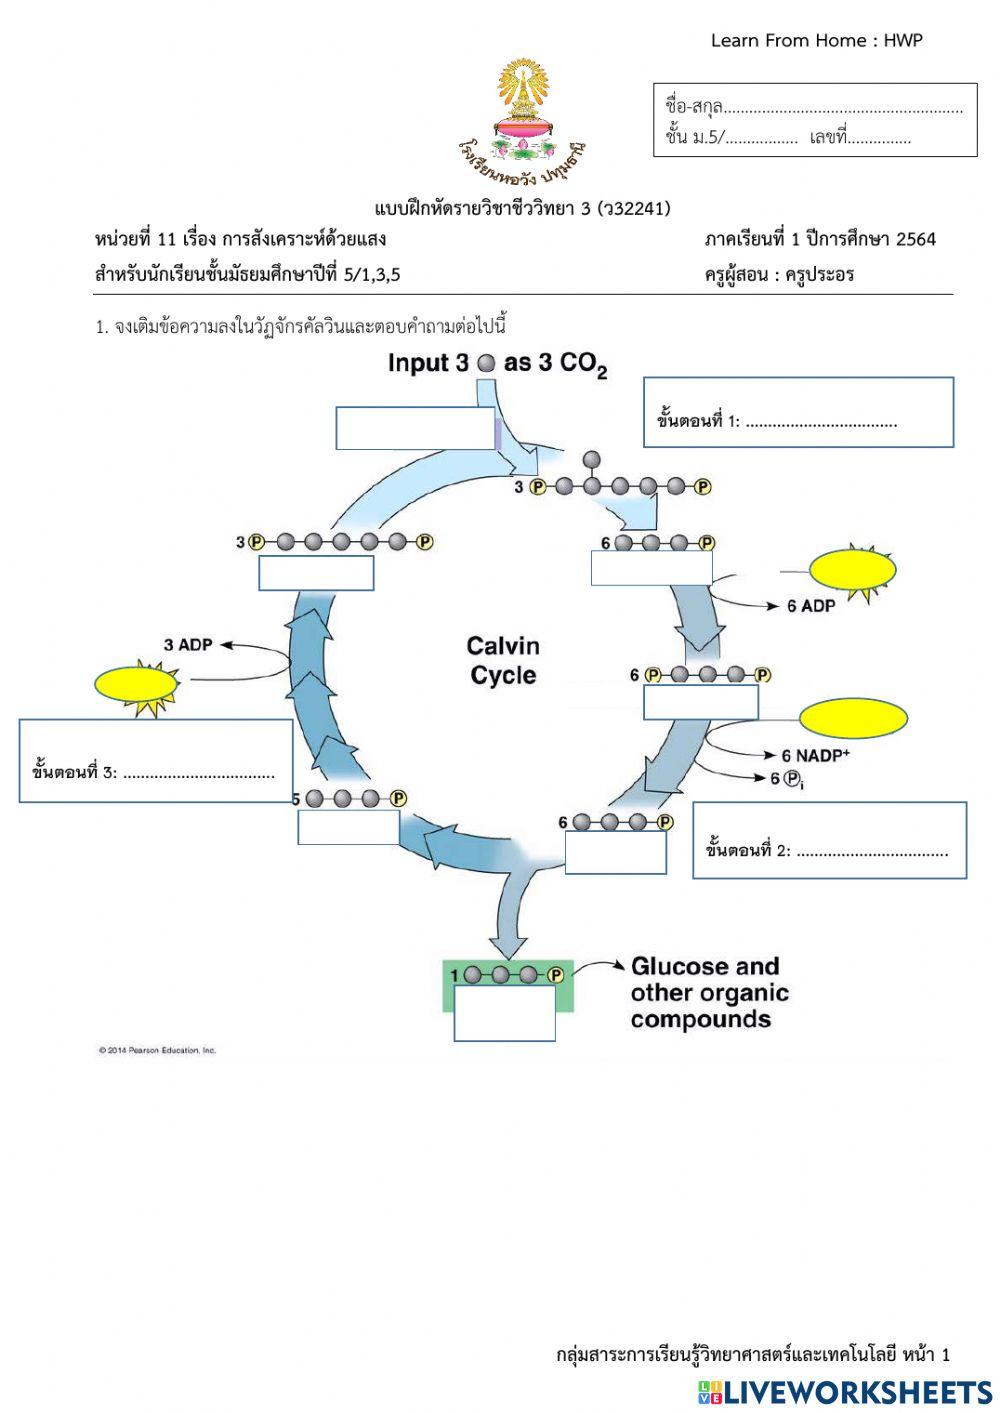 Calvin cycle